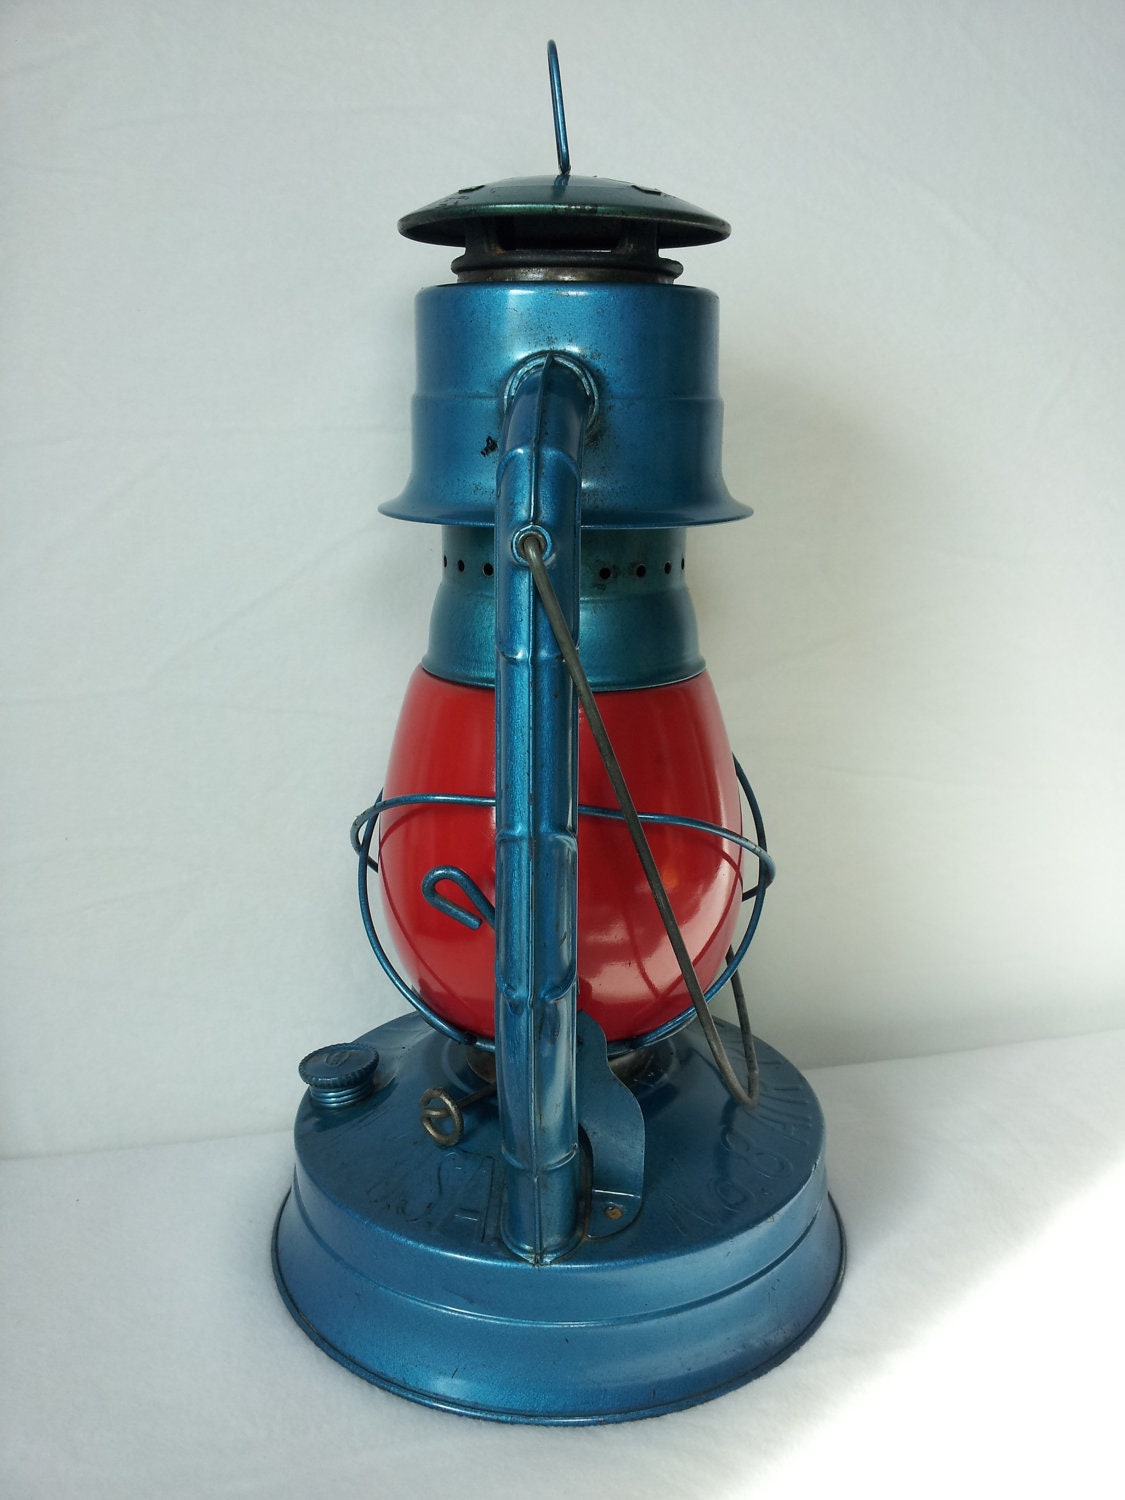 Dietz N.Y. U.S.A No. 8 Air Pilot Kerosene Lantern